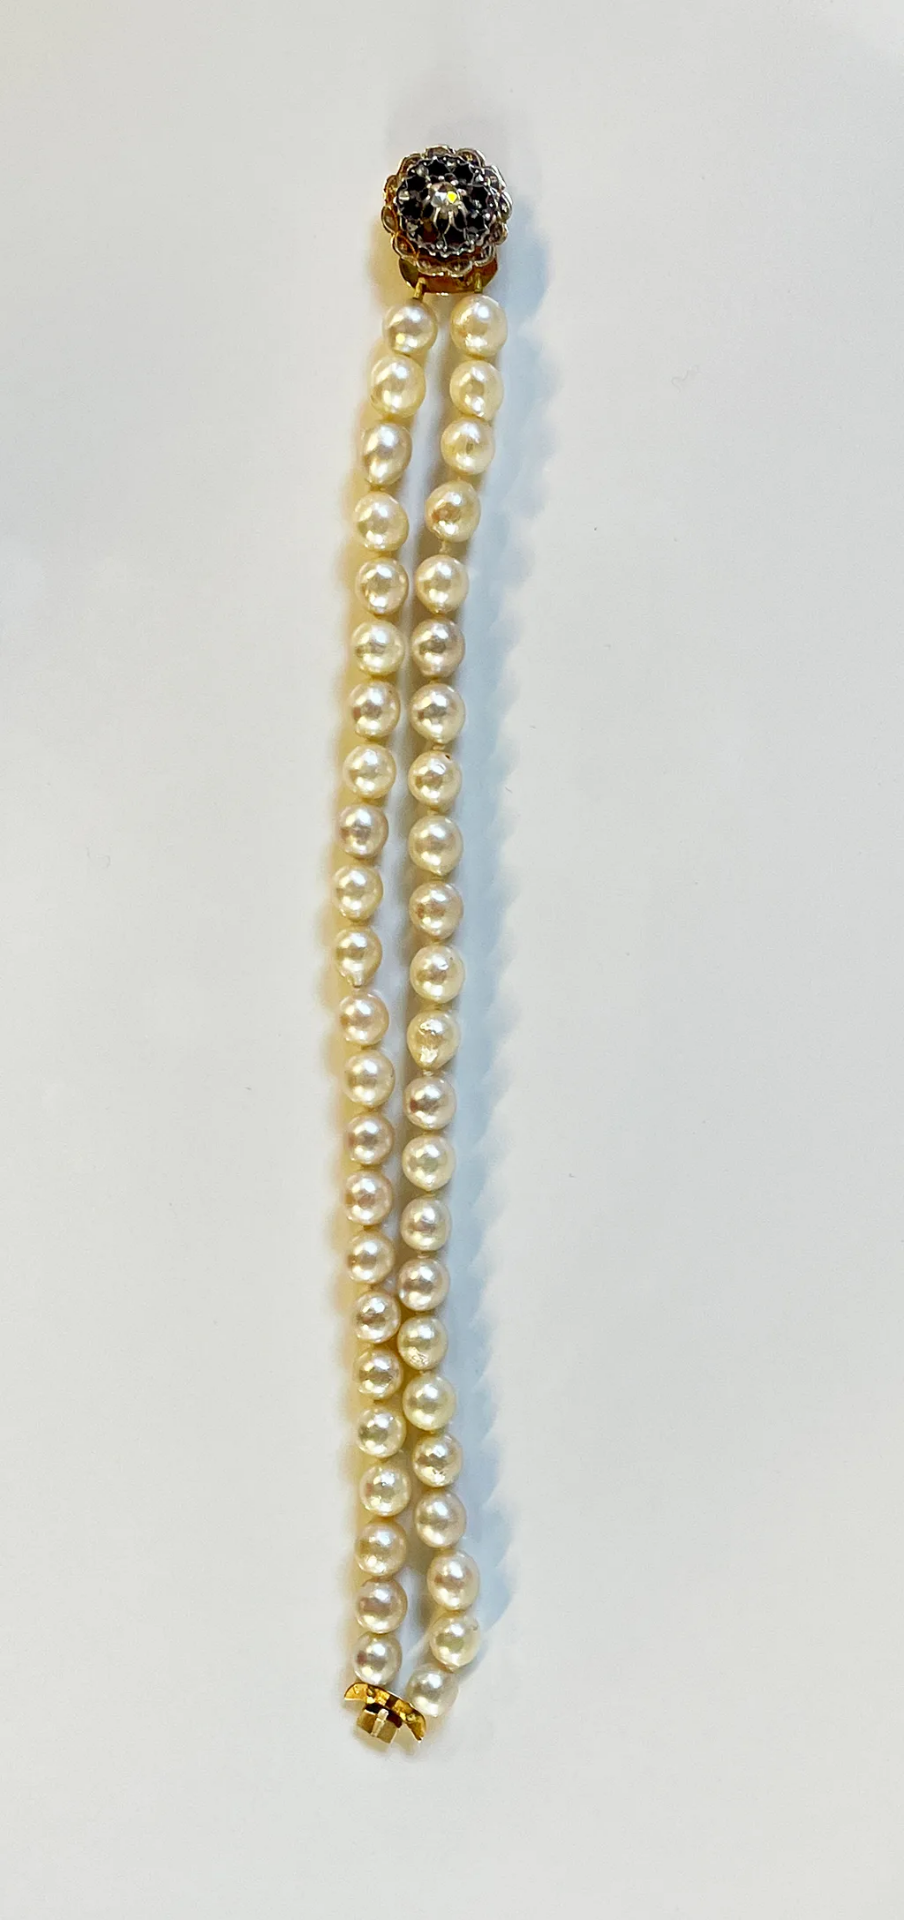 Antique Pearl Bracelet 14K Gold Clasp Rose Cut Diamonds - Image 2 of 4